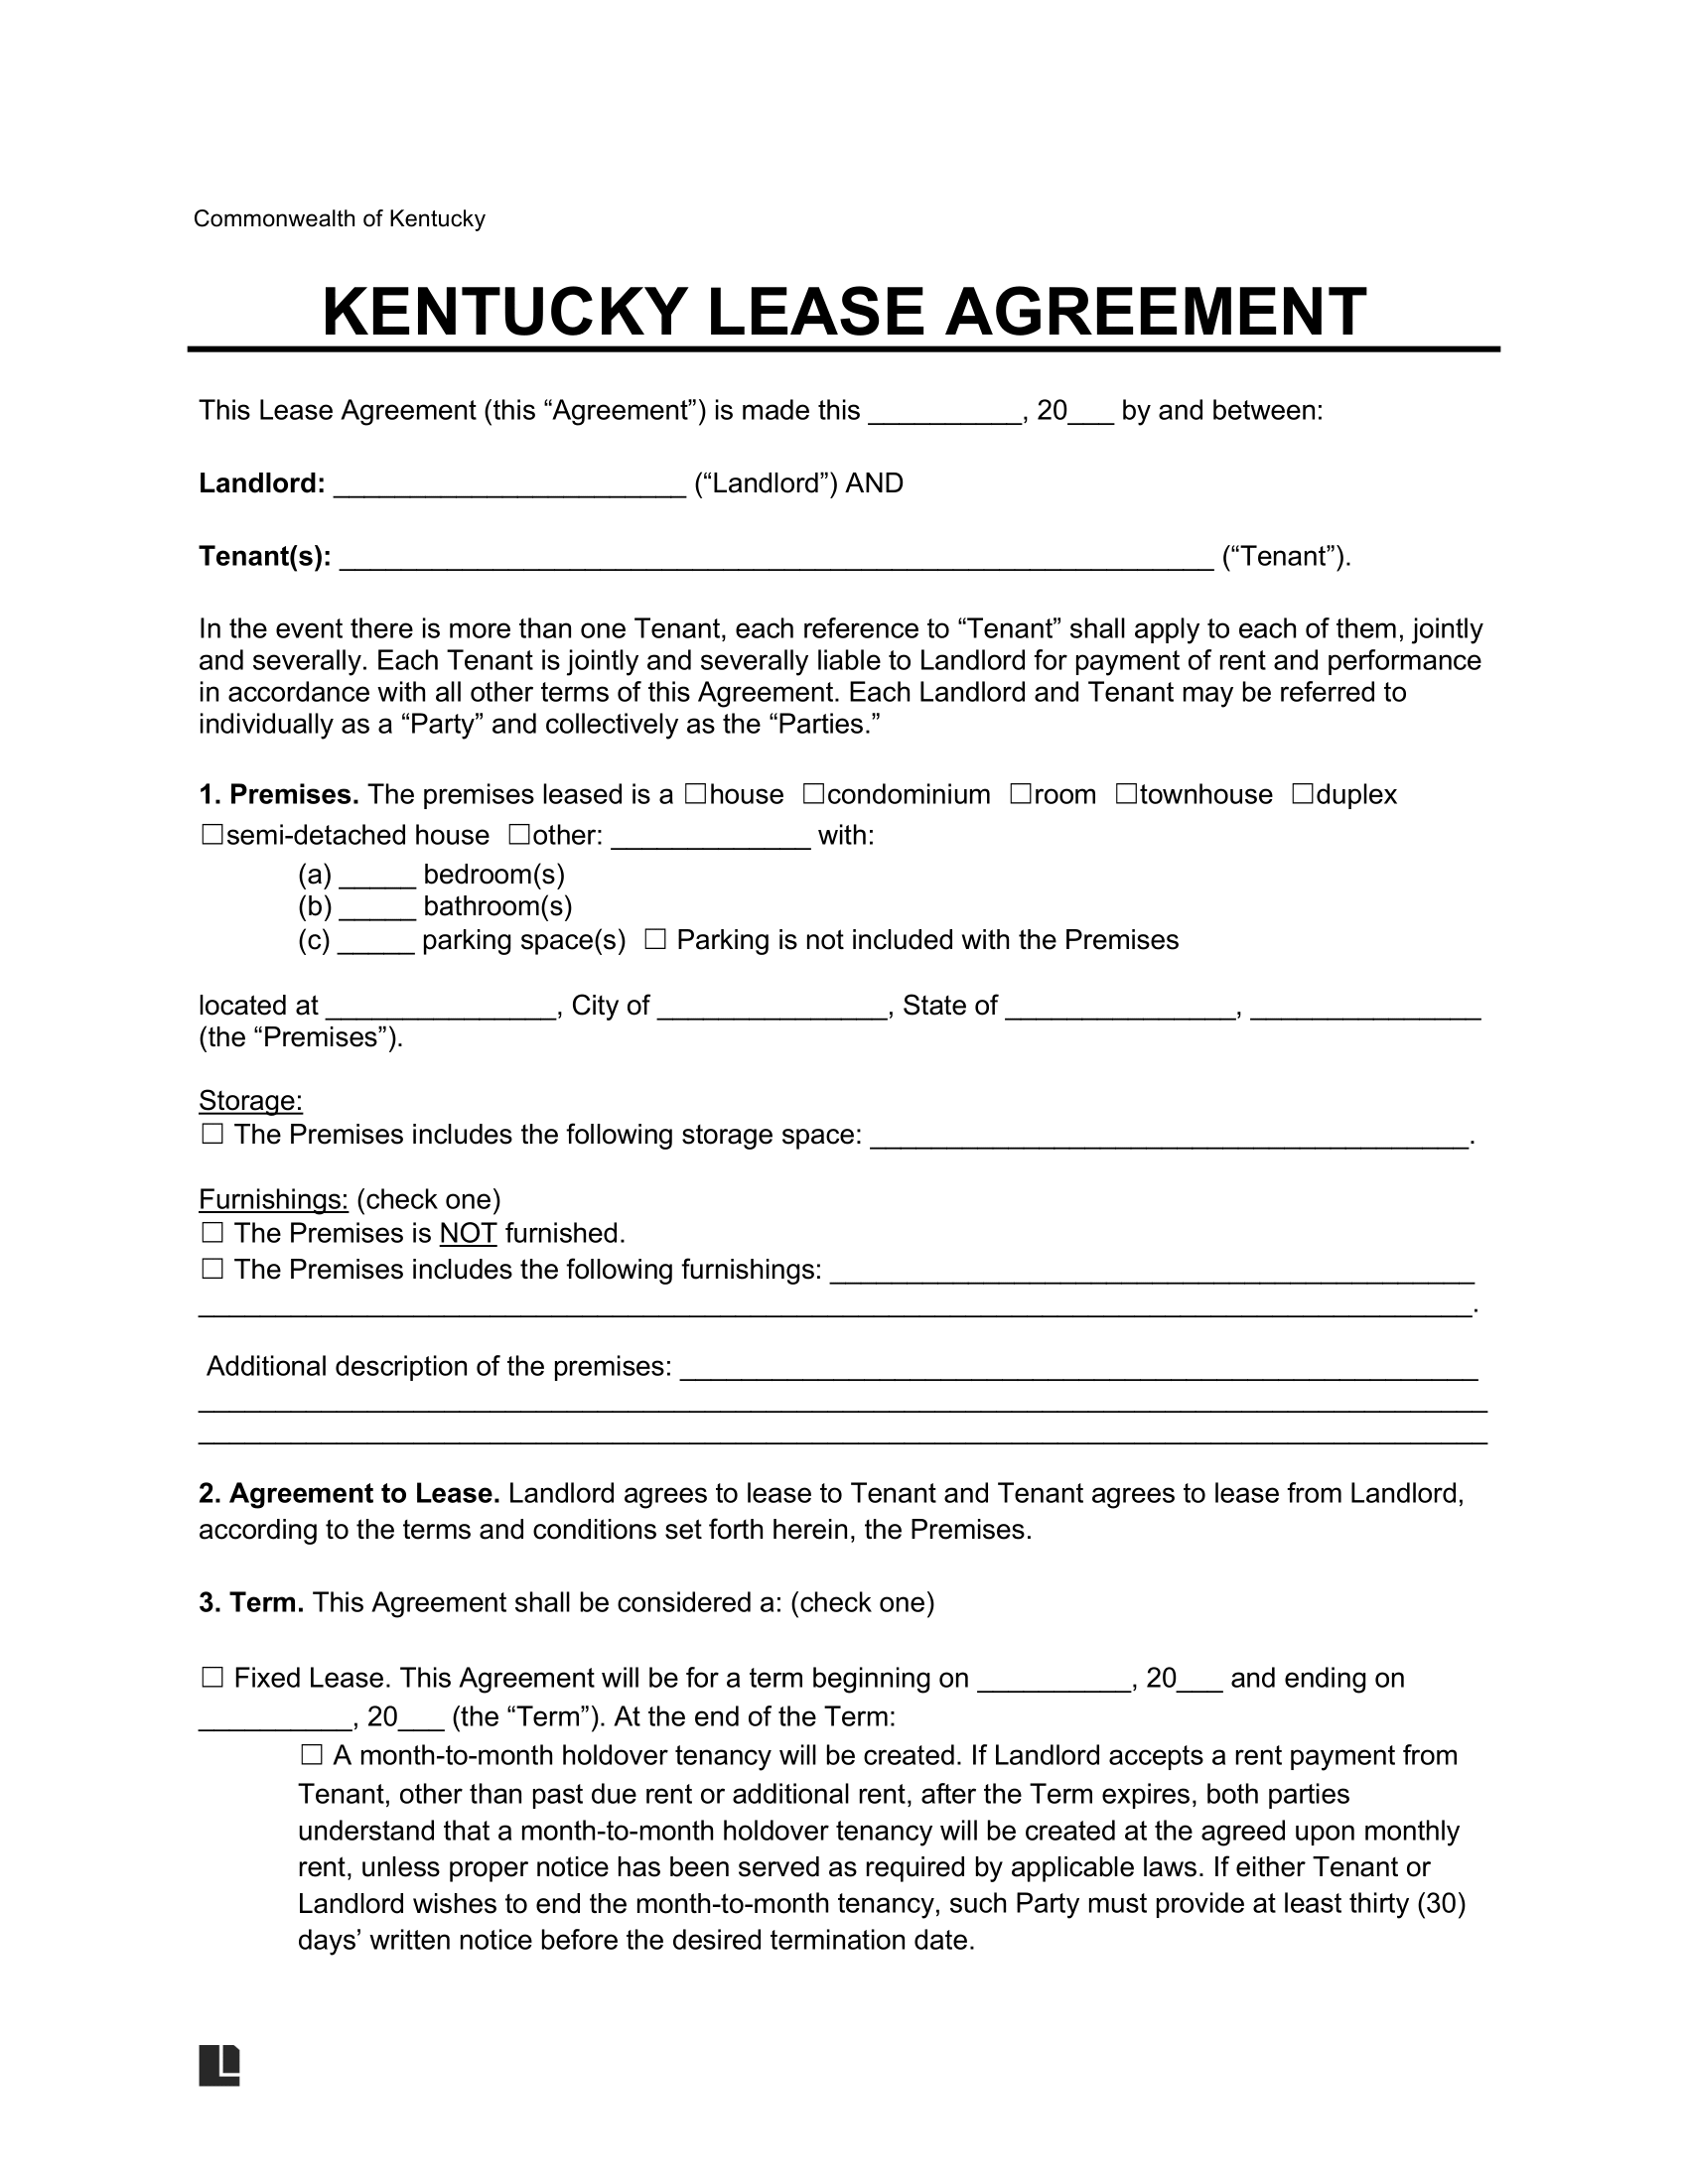 kentucky lease agreement